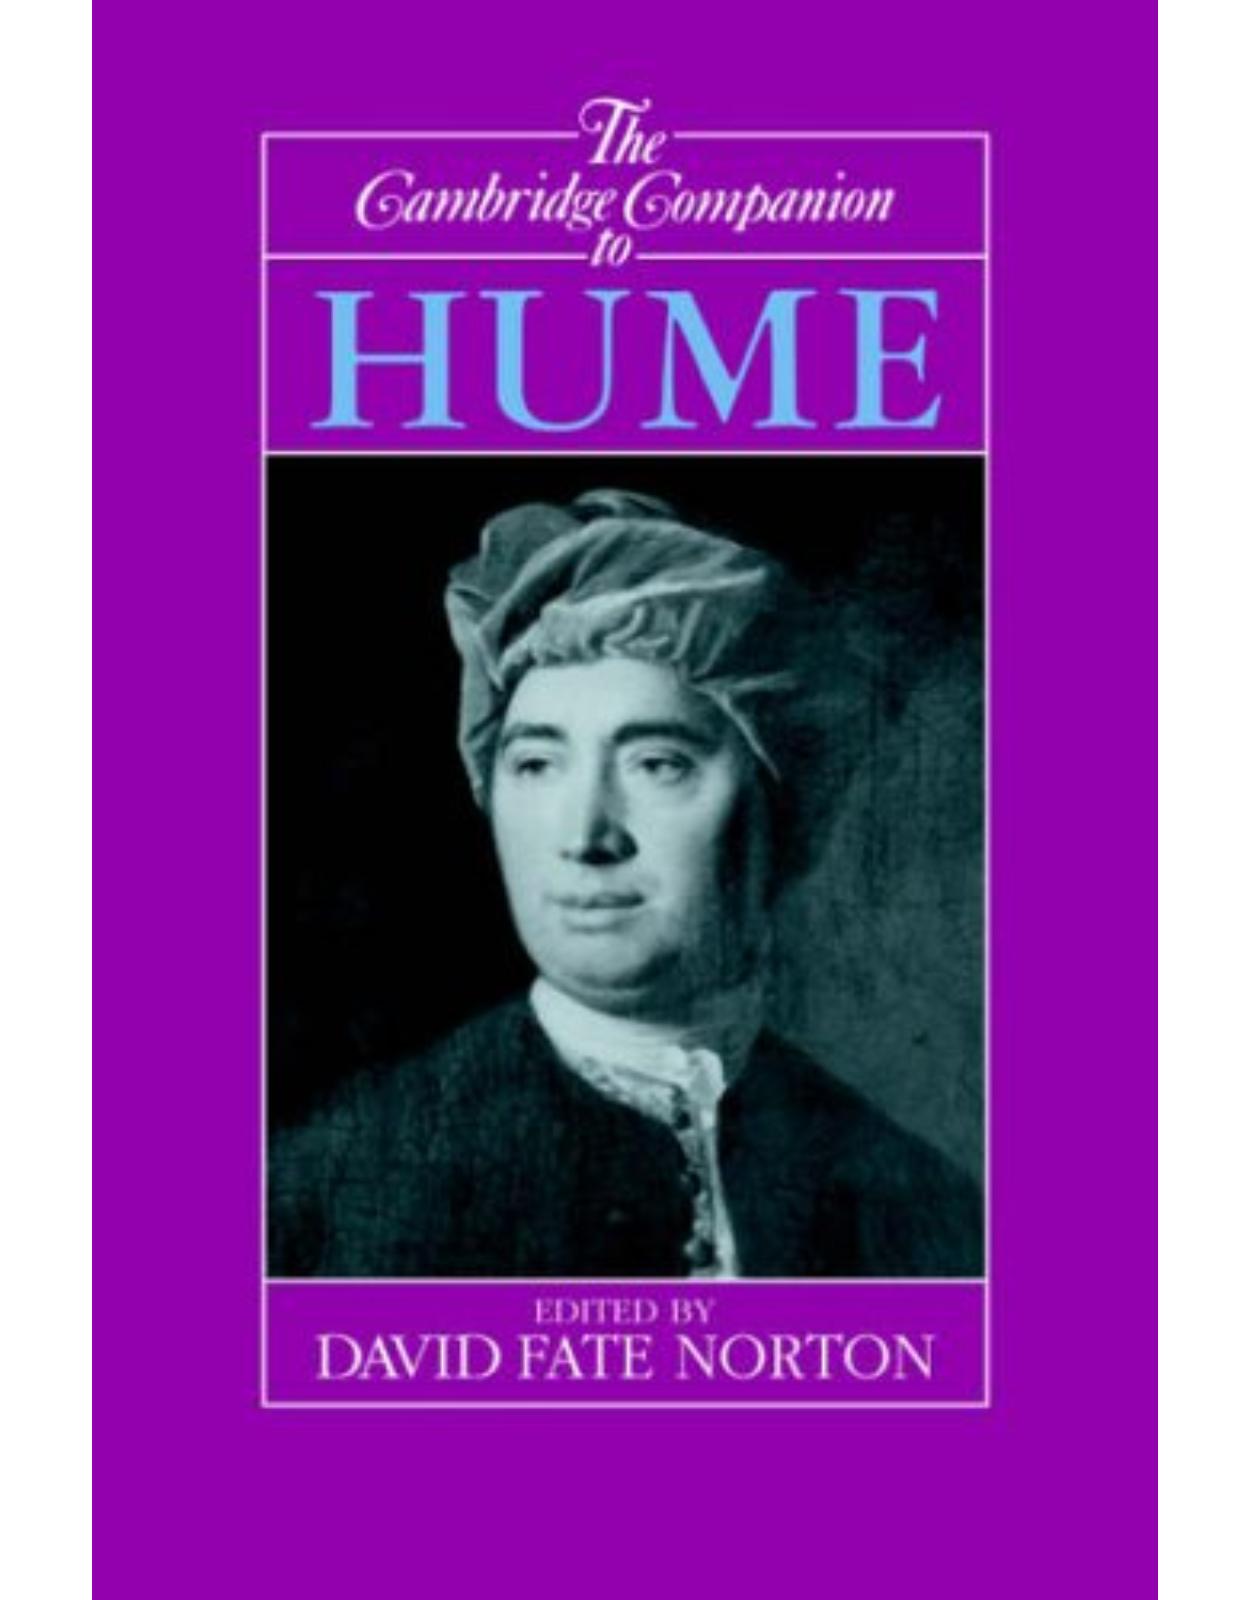 The Cambridge Companion to Hume (Cambridge Companions to Philosophy)